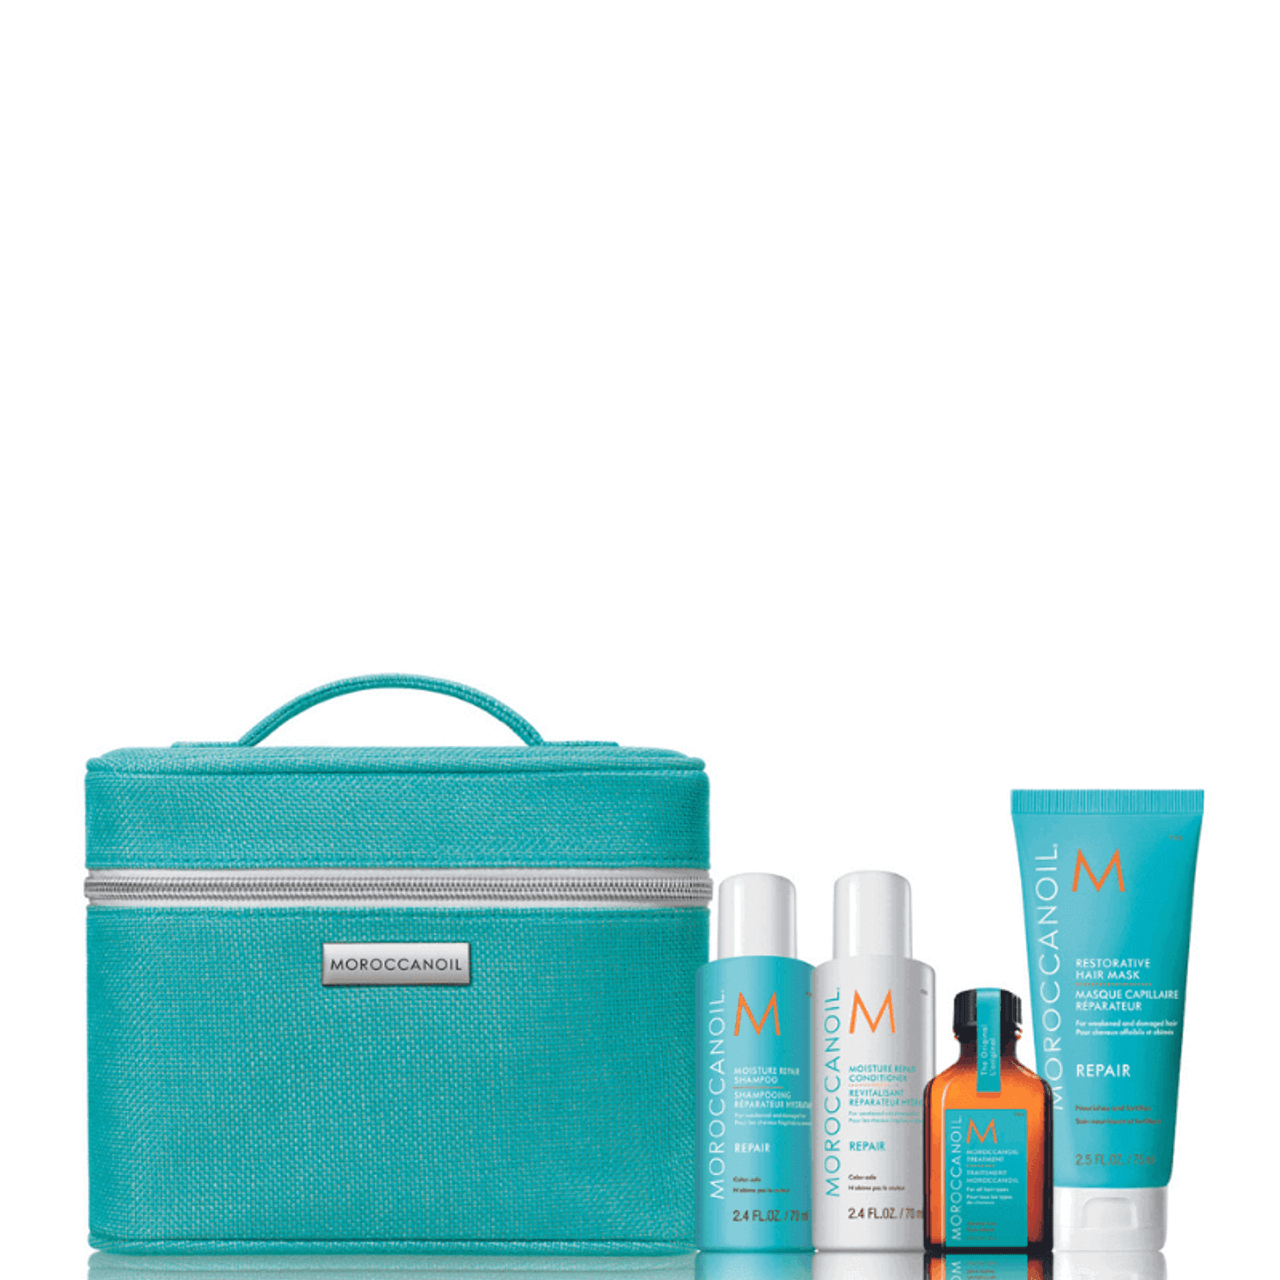 Moroccanoil Cosmetic Makeup Travel Case Bag - 9.5" x 7" x 3"  | eBay